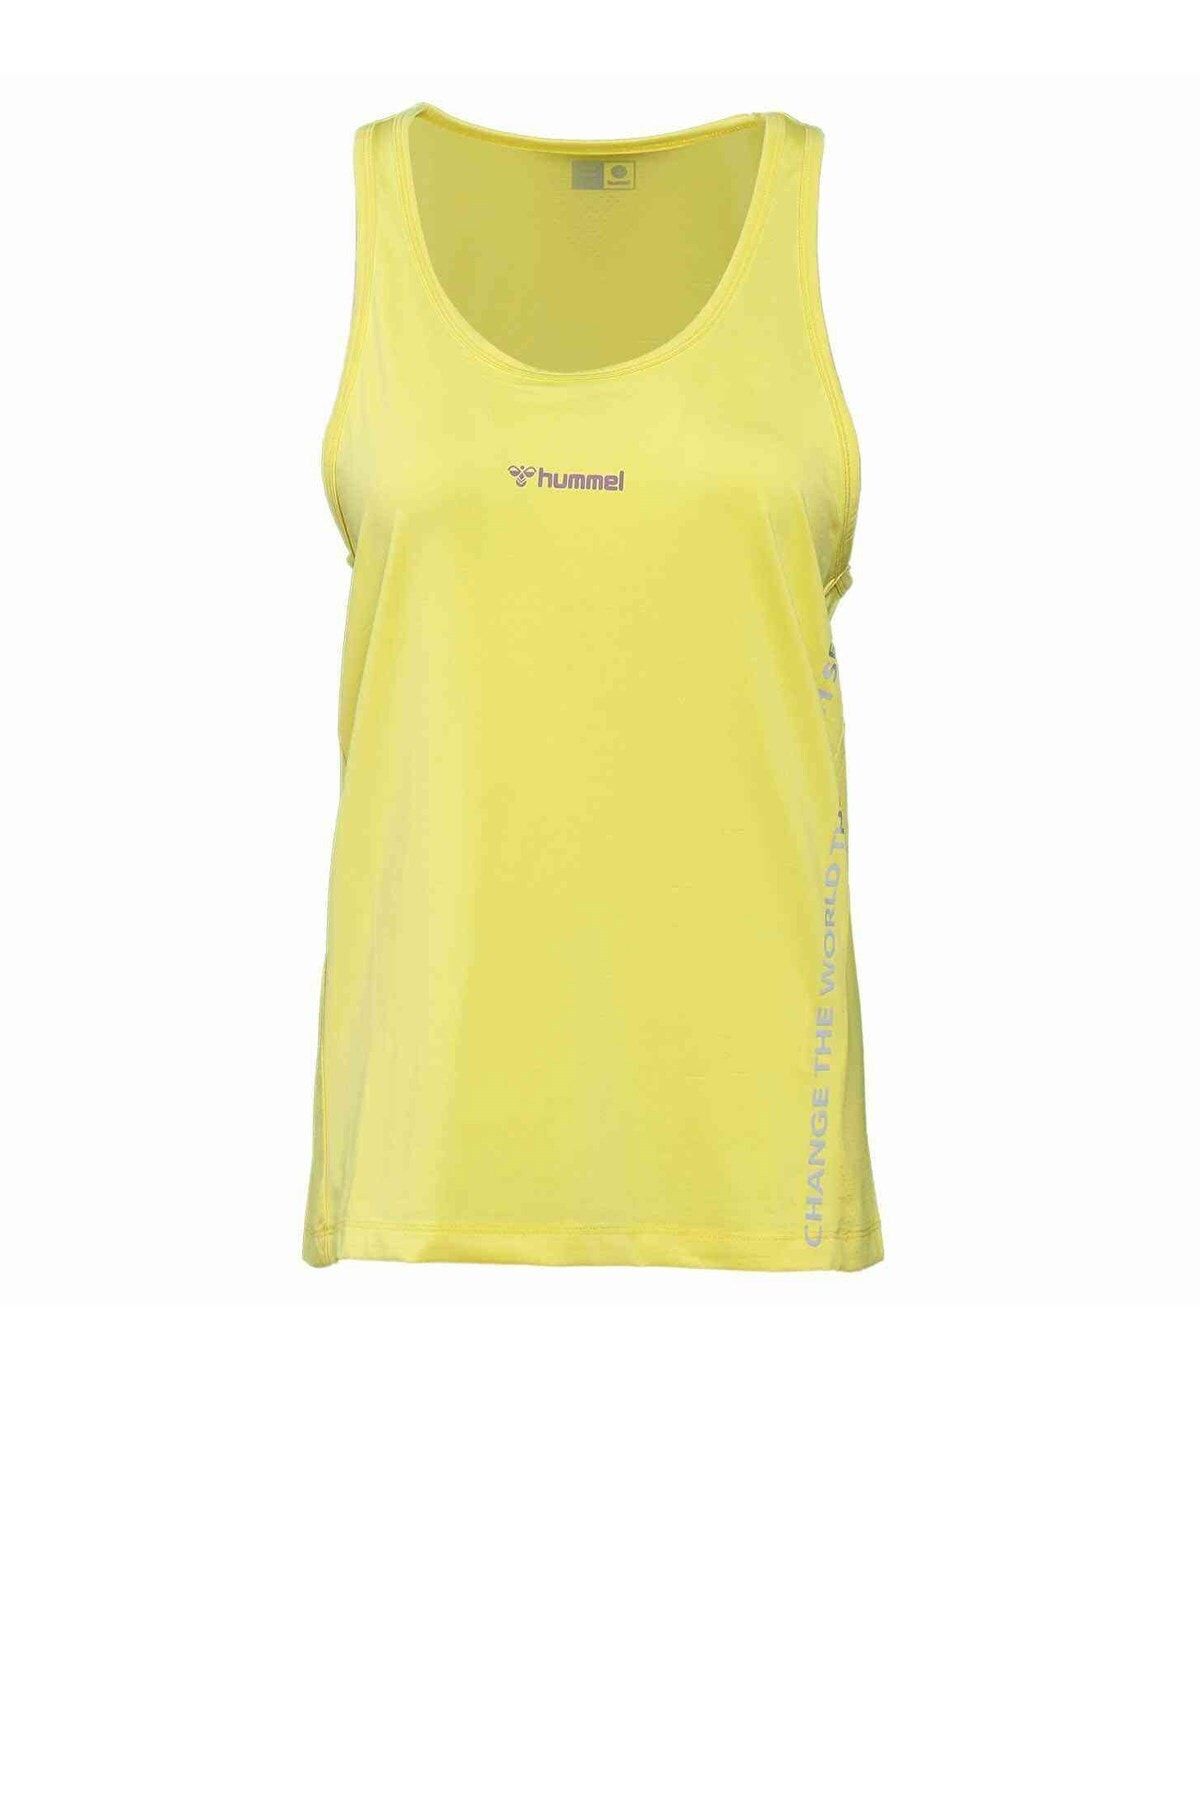 hummel تی شرت زنان Quastel 911256-5995